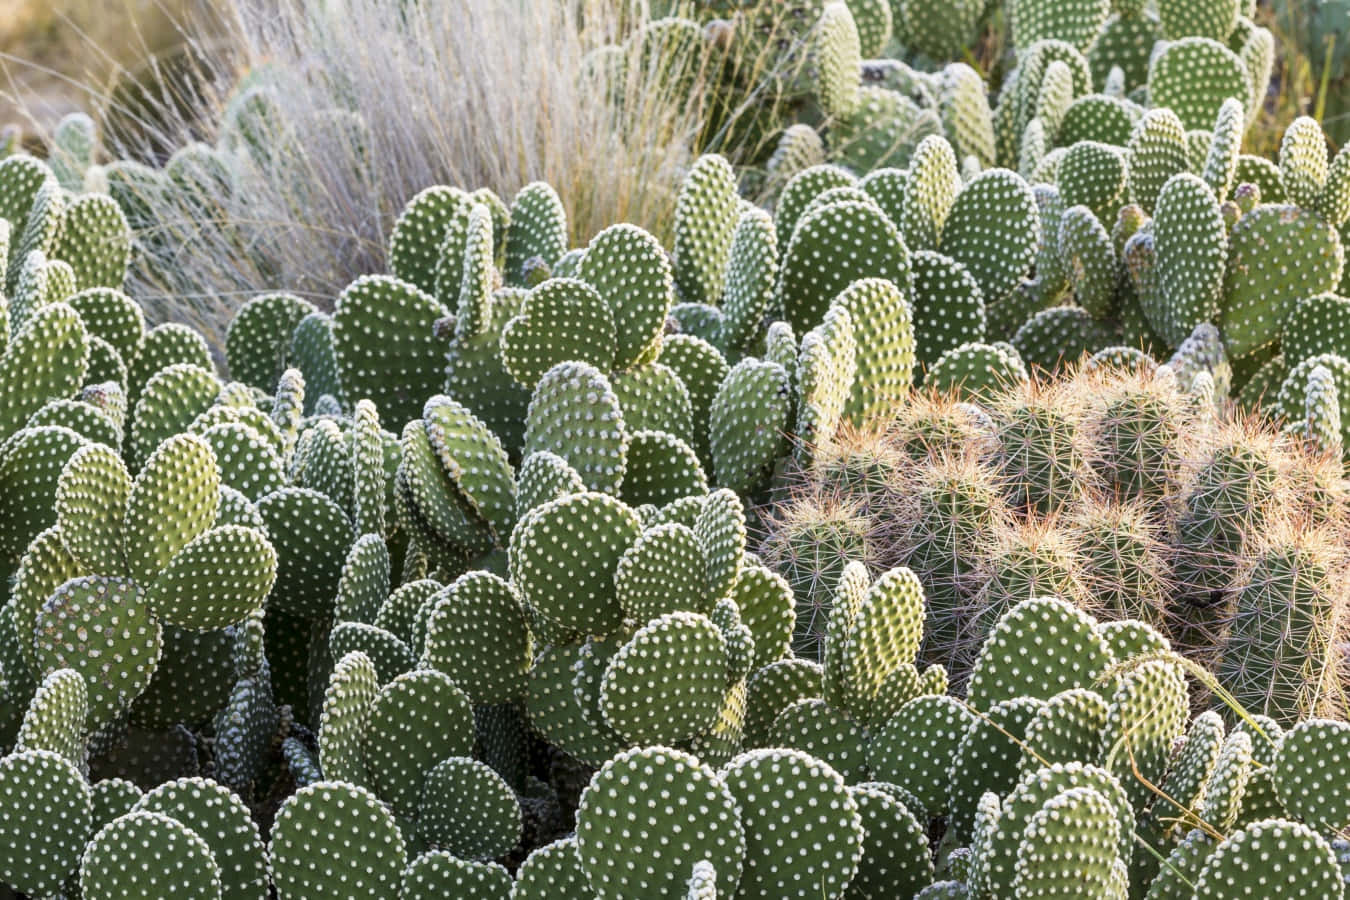 Cactus Plants In The Desert